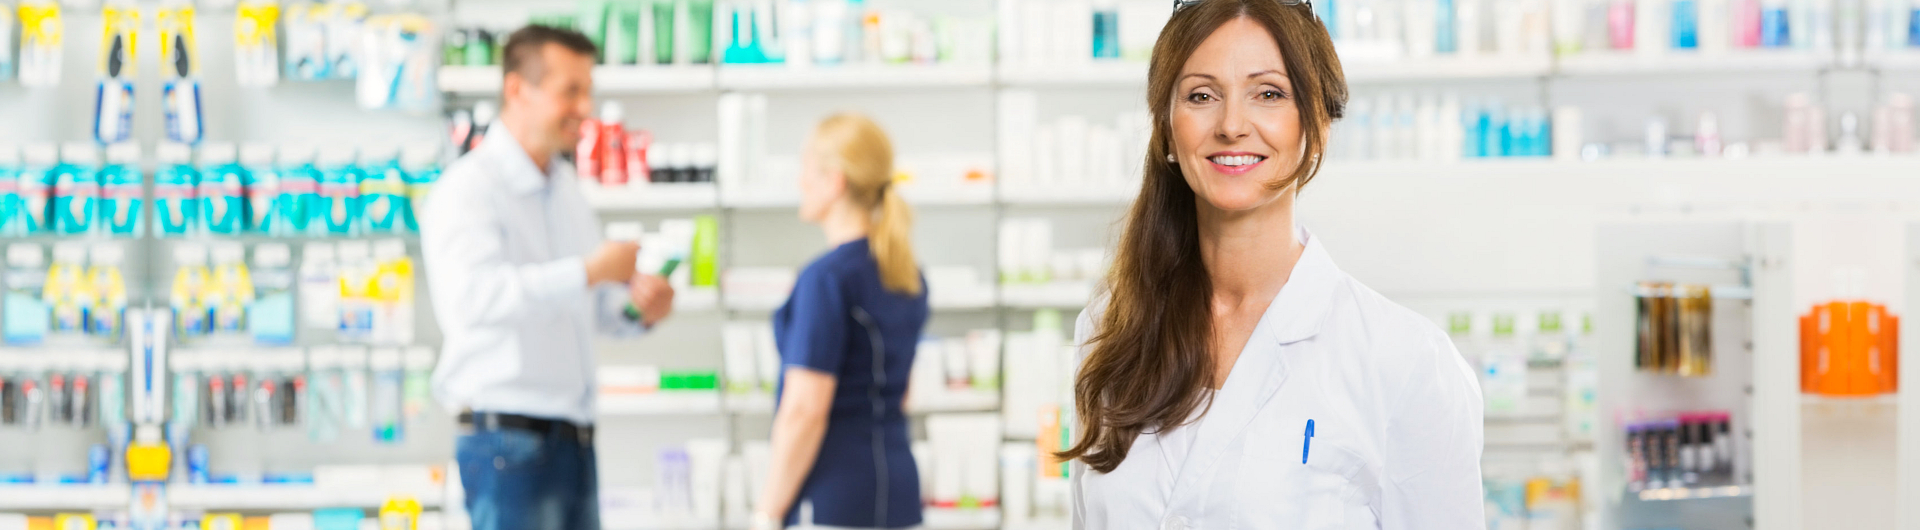 pharmacist woman smiling